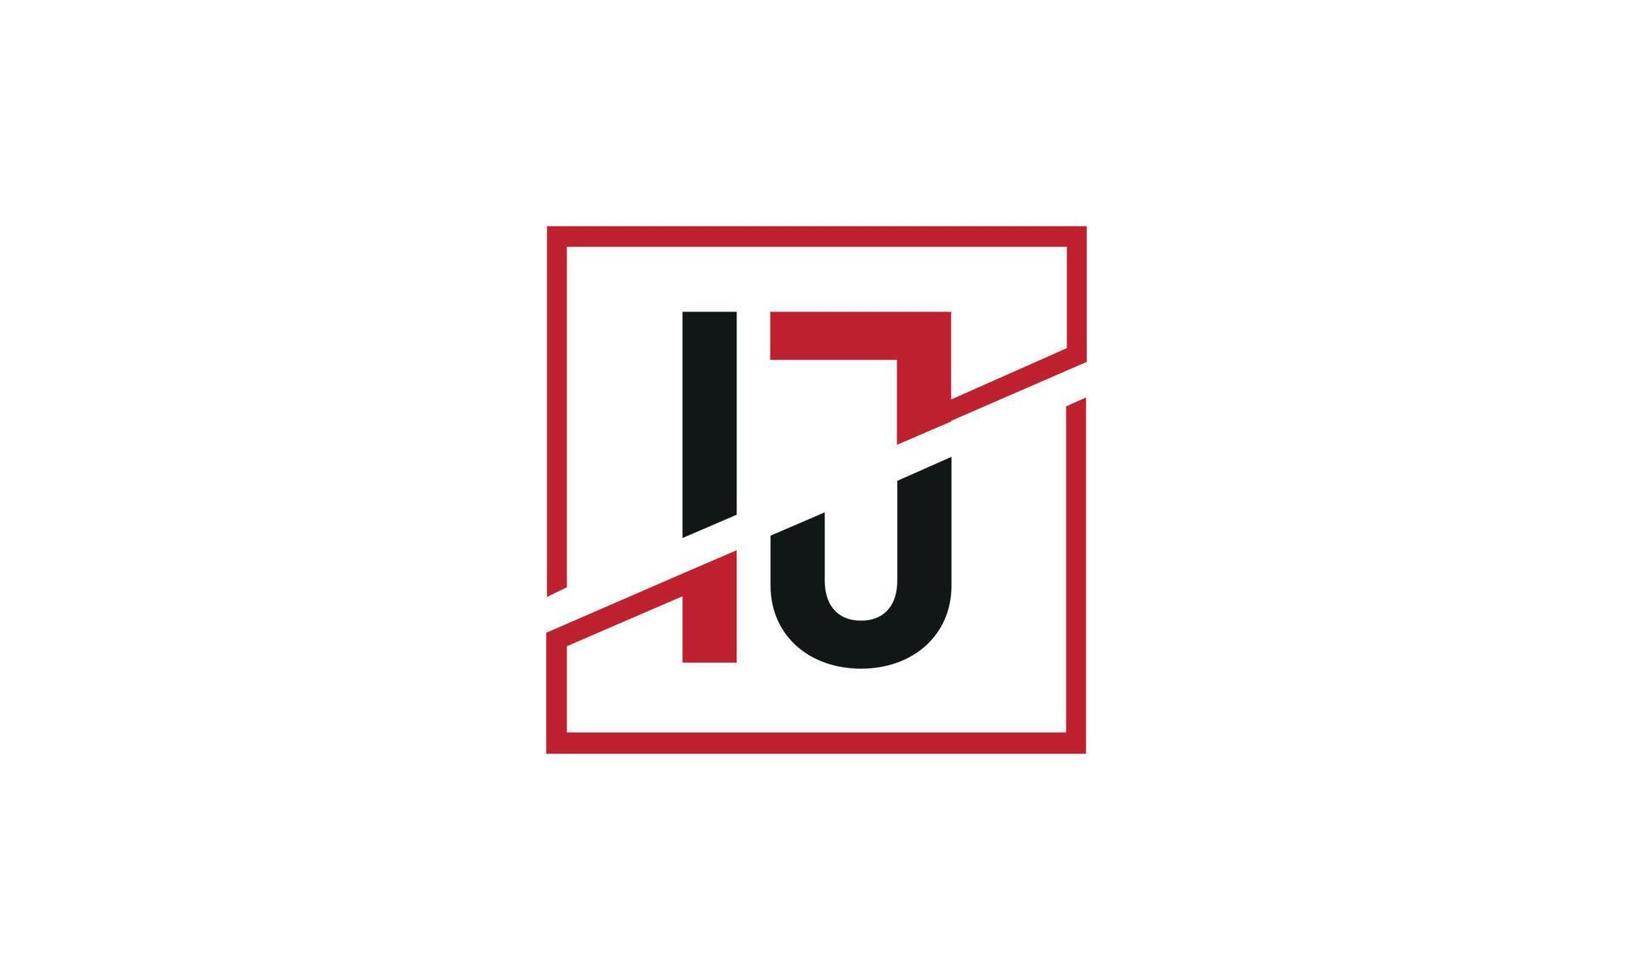 IJ logo design. Initial IJ letter logo monogram design in black and red color with square shape. Pro vector